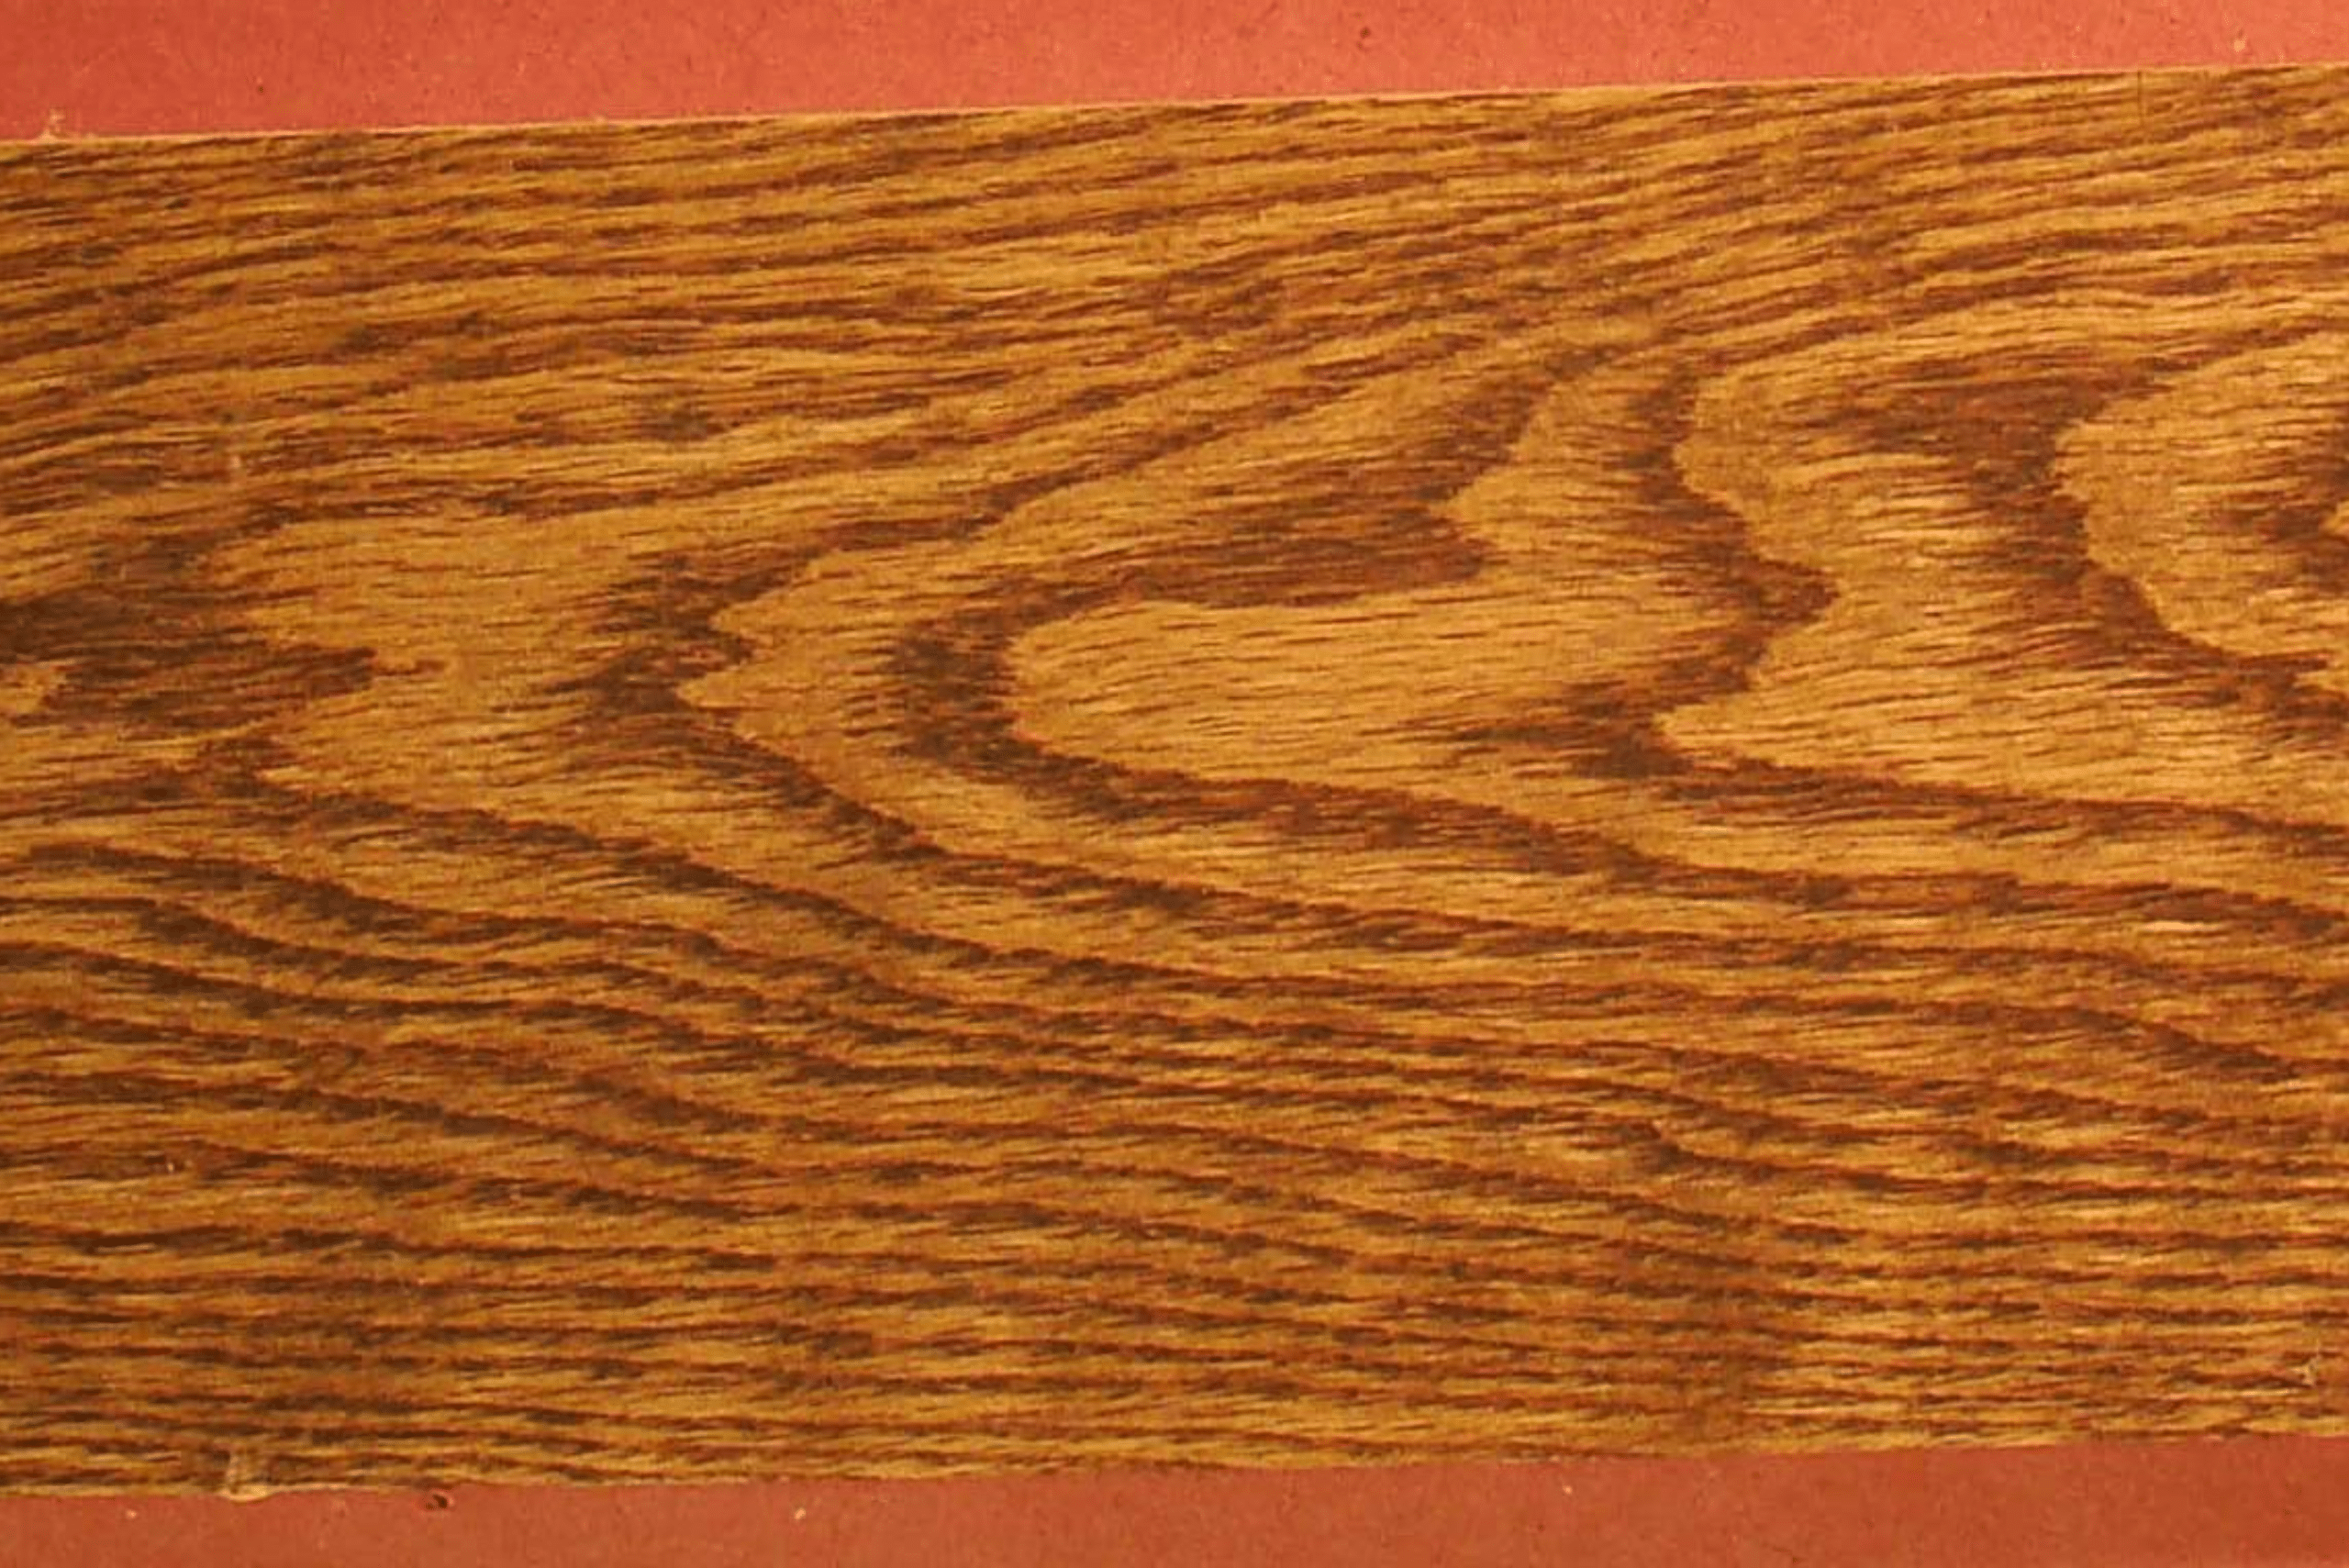 Plain sawn wood face with grain.